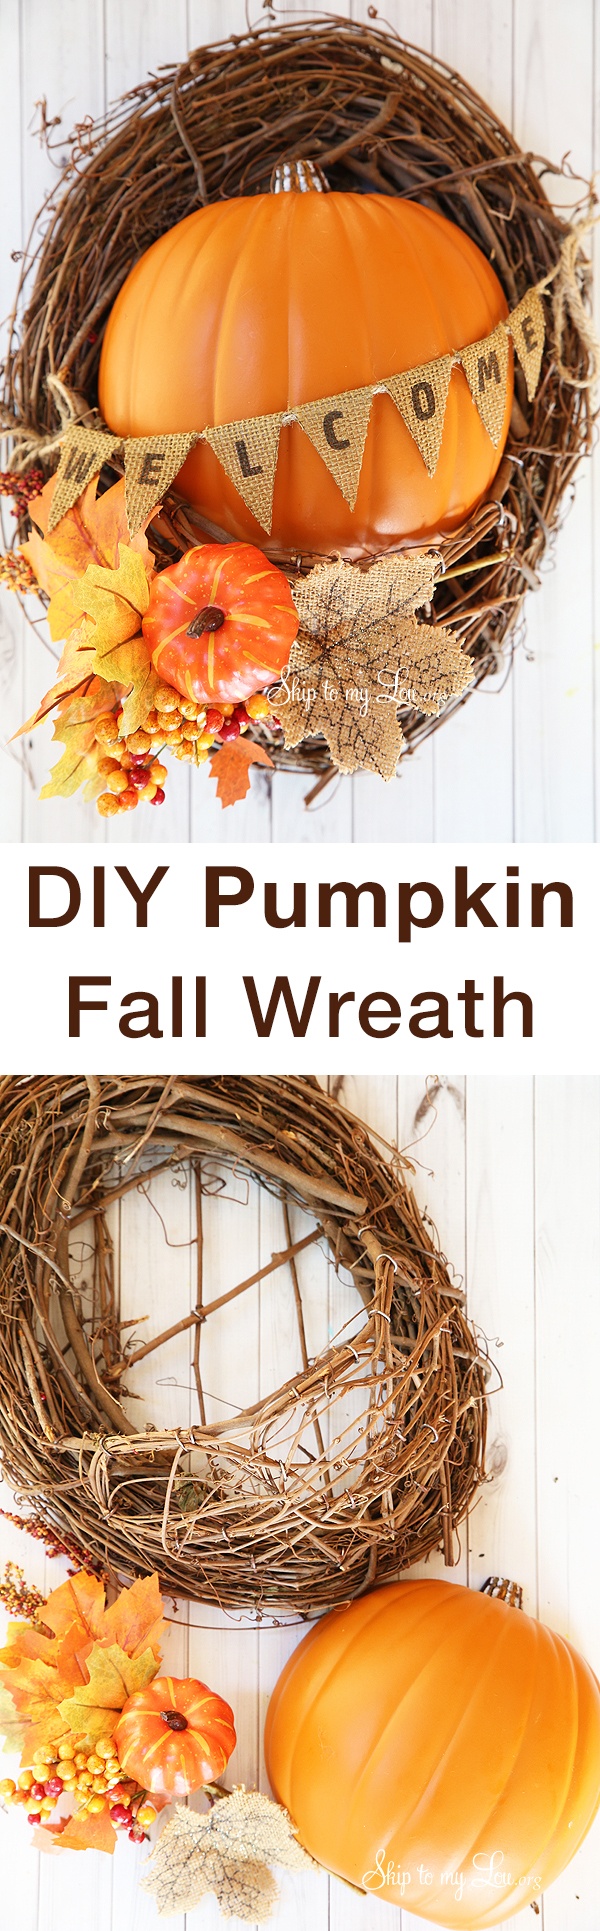 DIY Pumpkin Fall Wreath